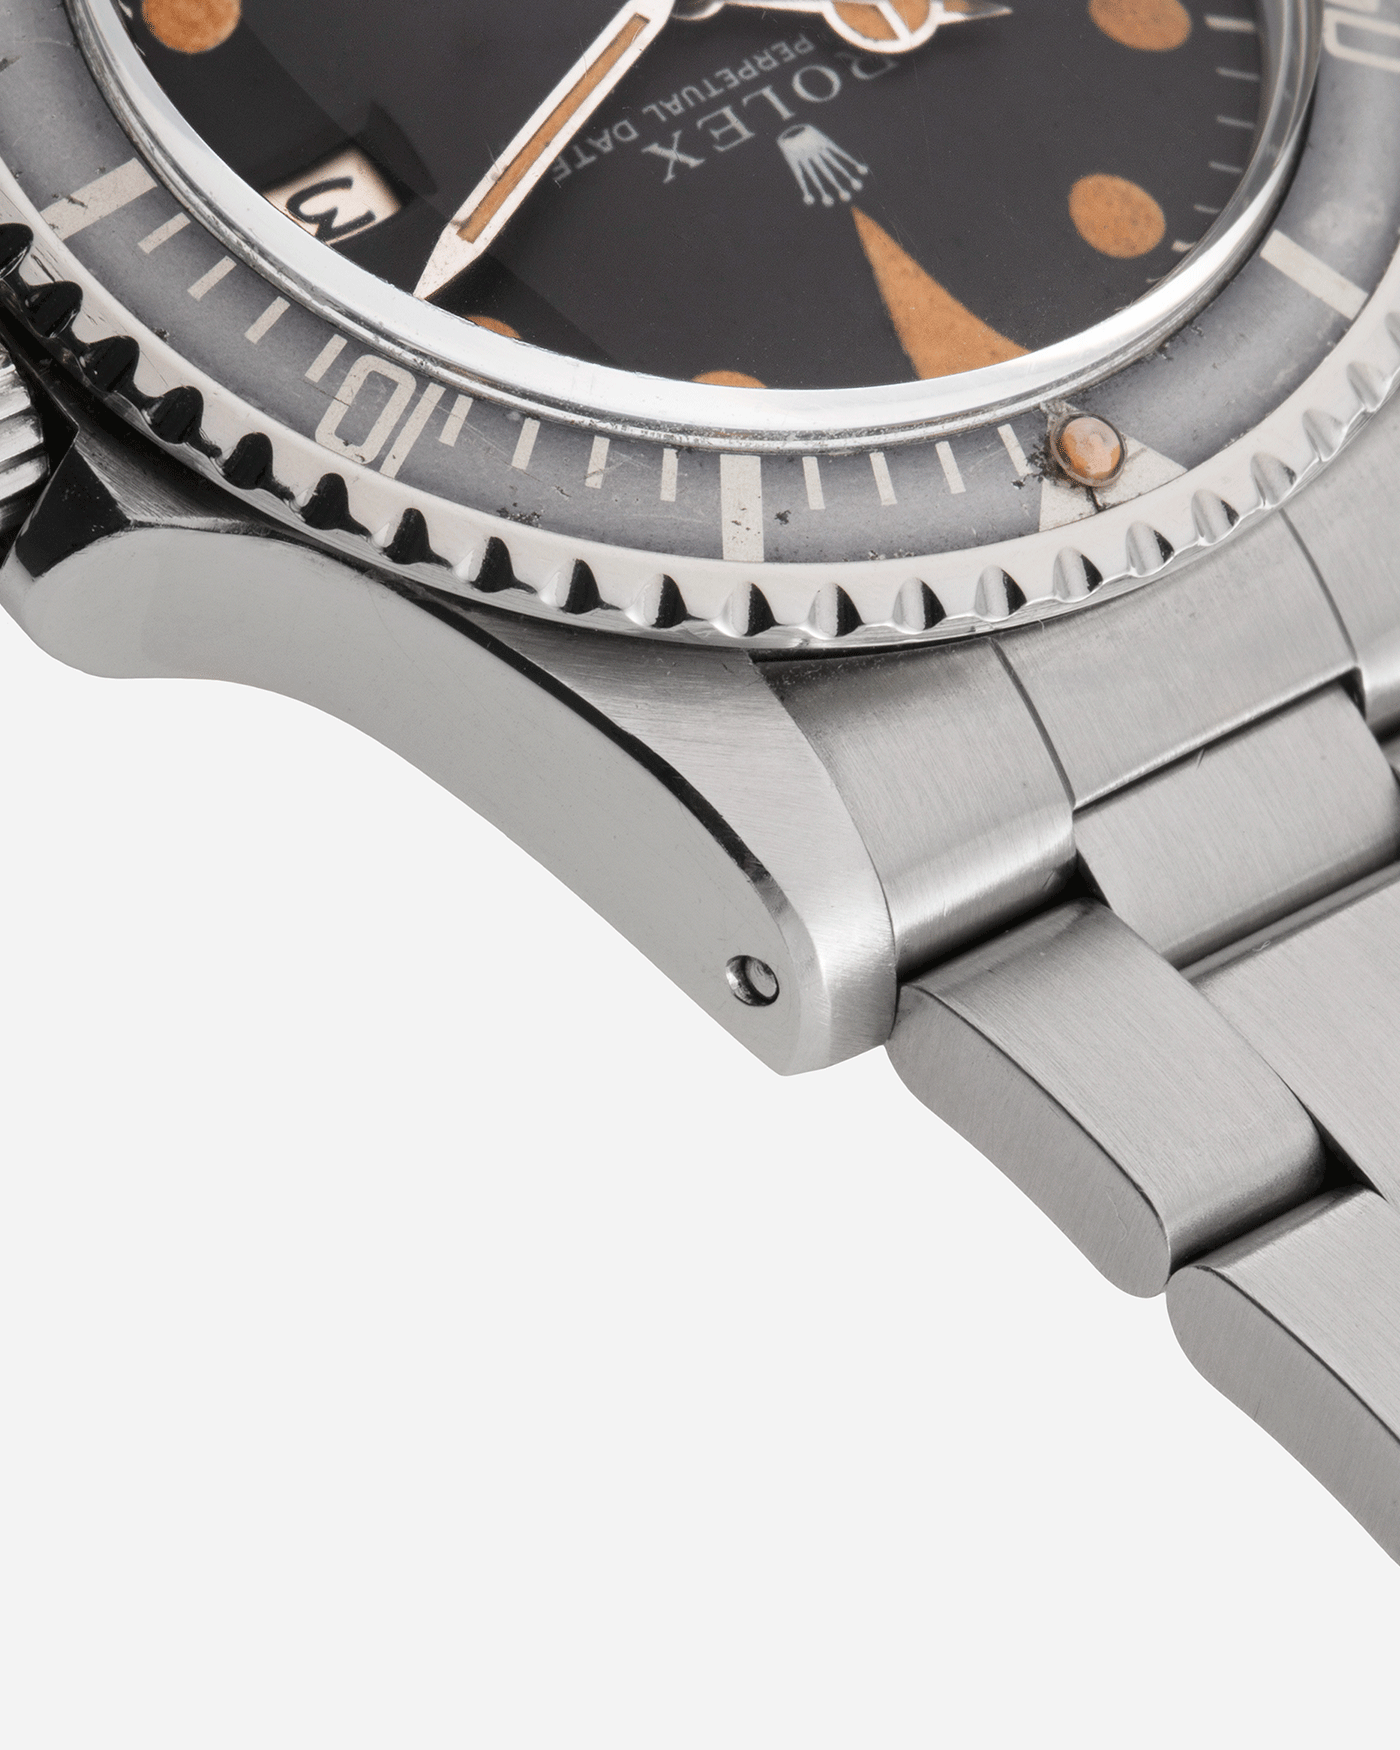 Brand: Rolex Model: Submariner Reference Number: 1680 ‘Red’ Material: Stainless Steel Movement: Cal. 1570 Case Diameter: 40mm Lug Width: 20mm Bracelet/Strap: Rolex 93150 Oyster bracelet with 580 endlinks.